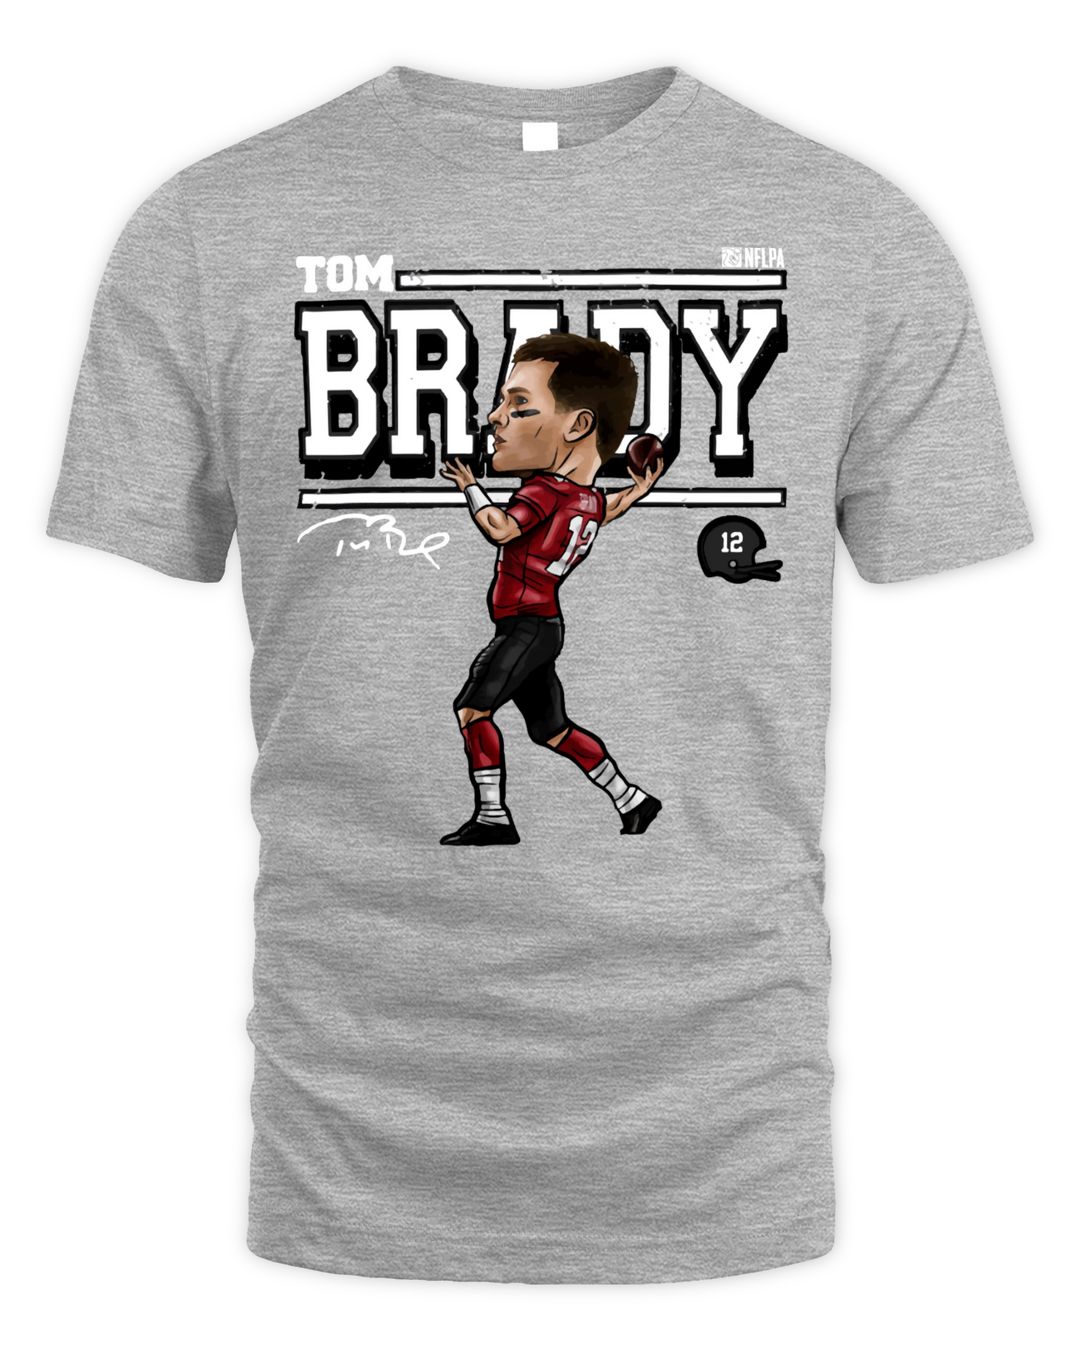 Tom Brady Merch Cartoon Shirt